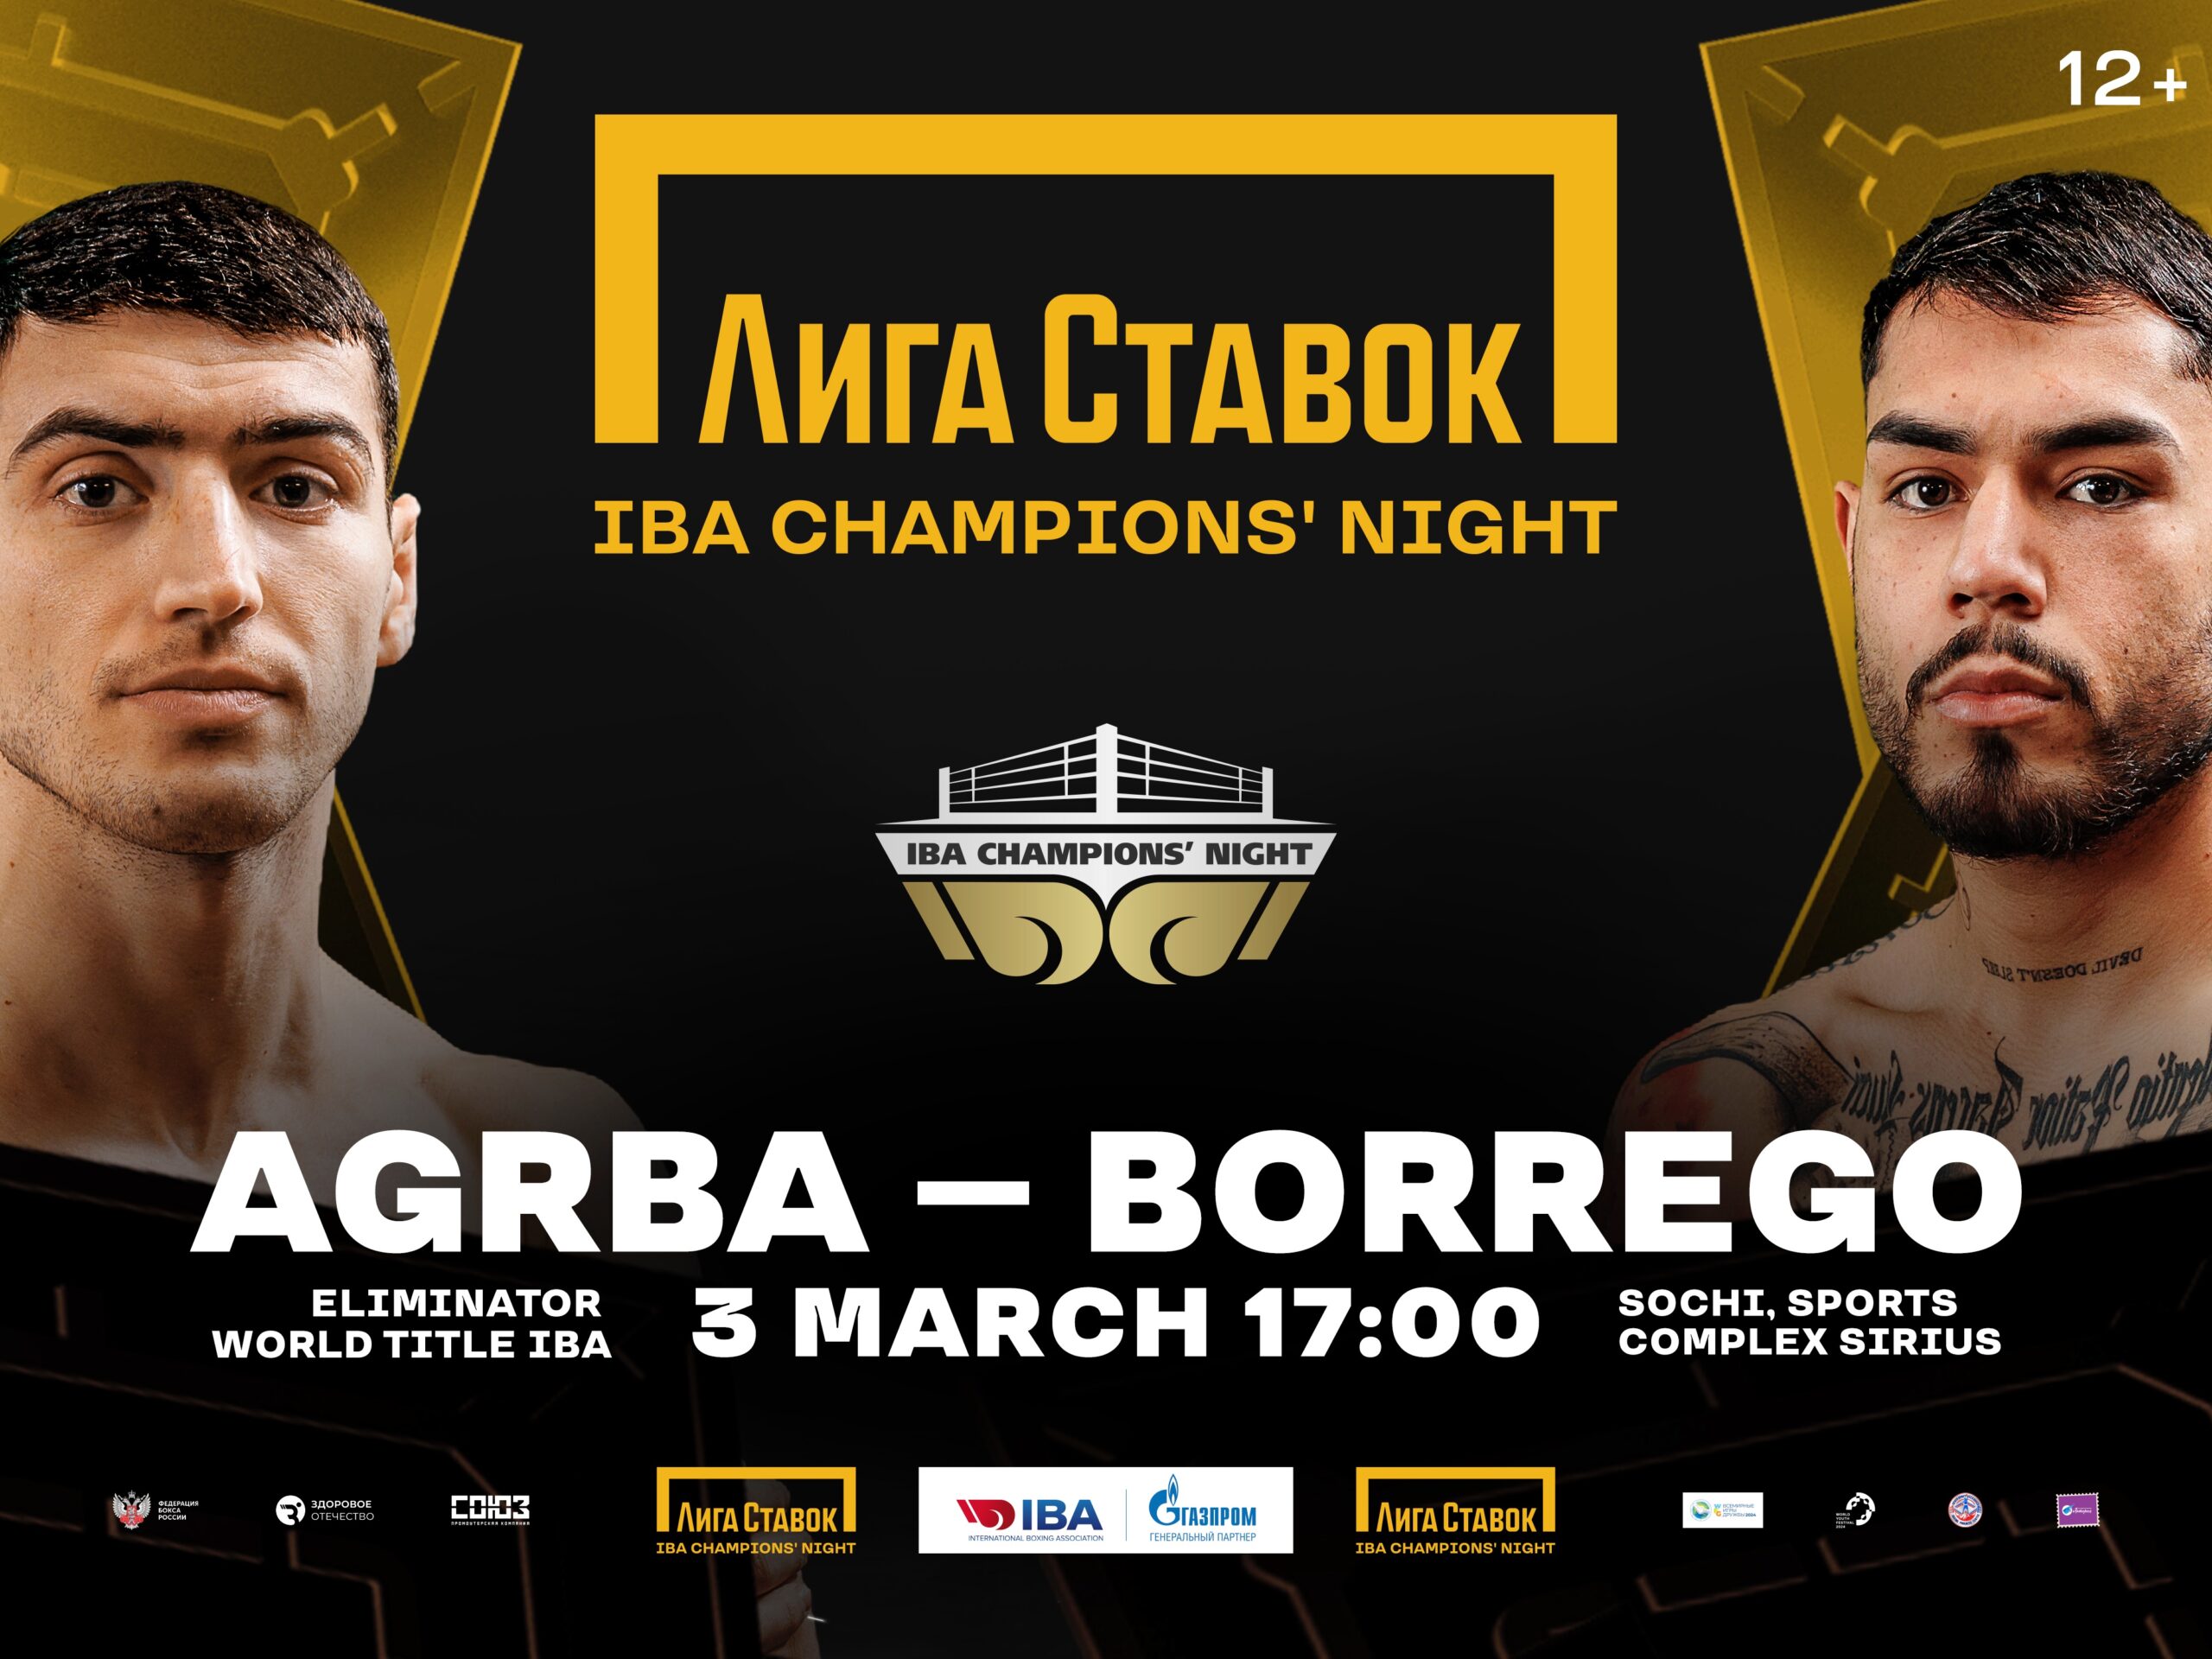 AGRBA AND BORREGO SHOWDOWN SET FOR IBA CHAMPIONS’ NIGHT IN SOCHI